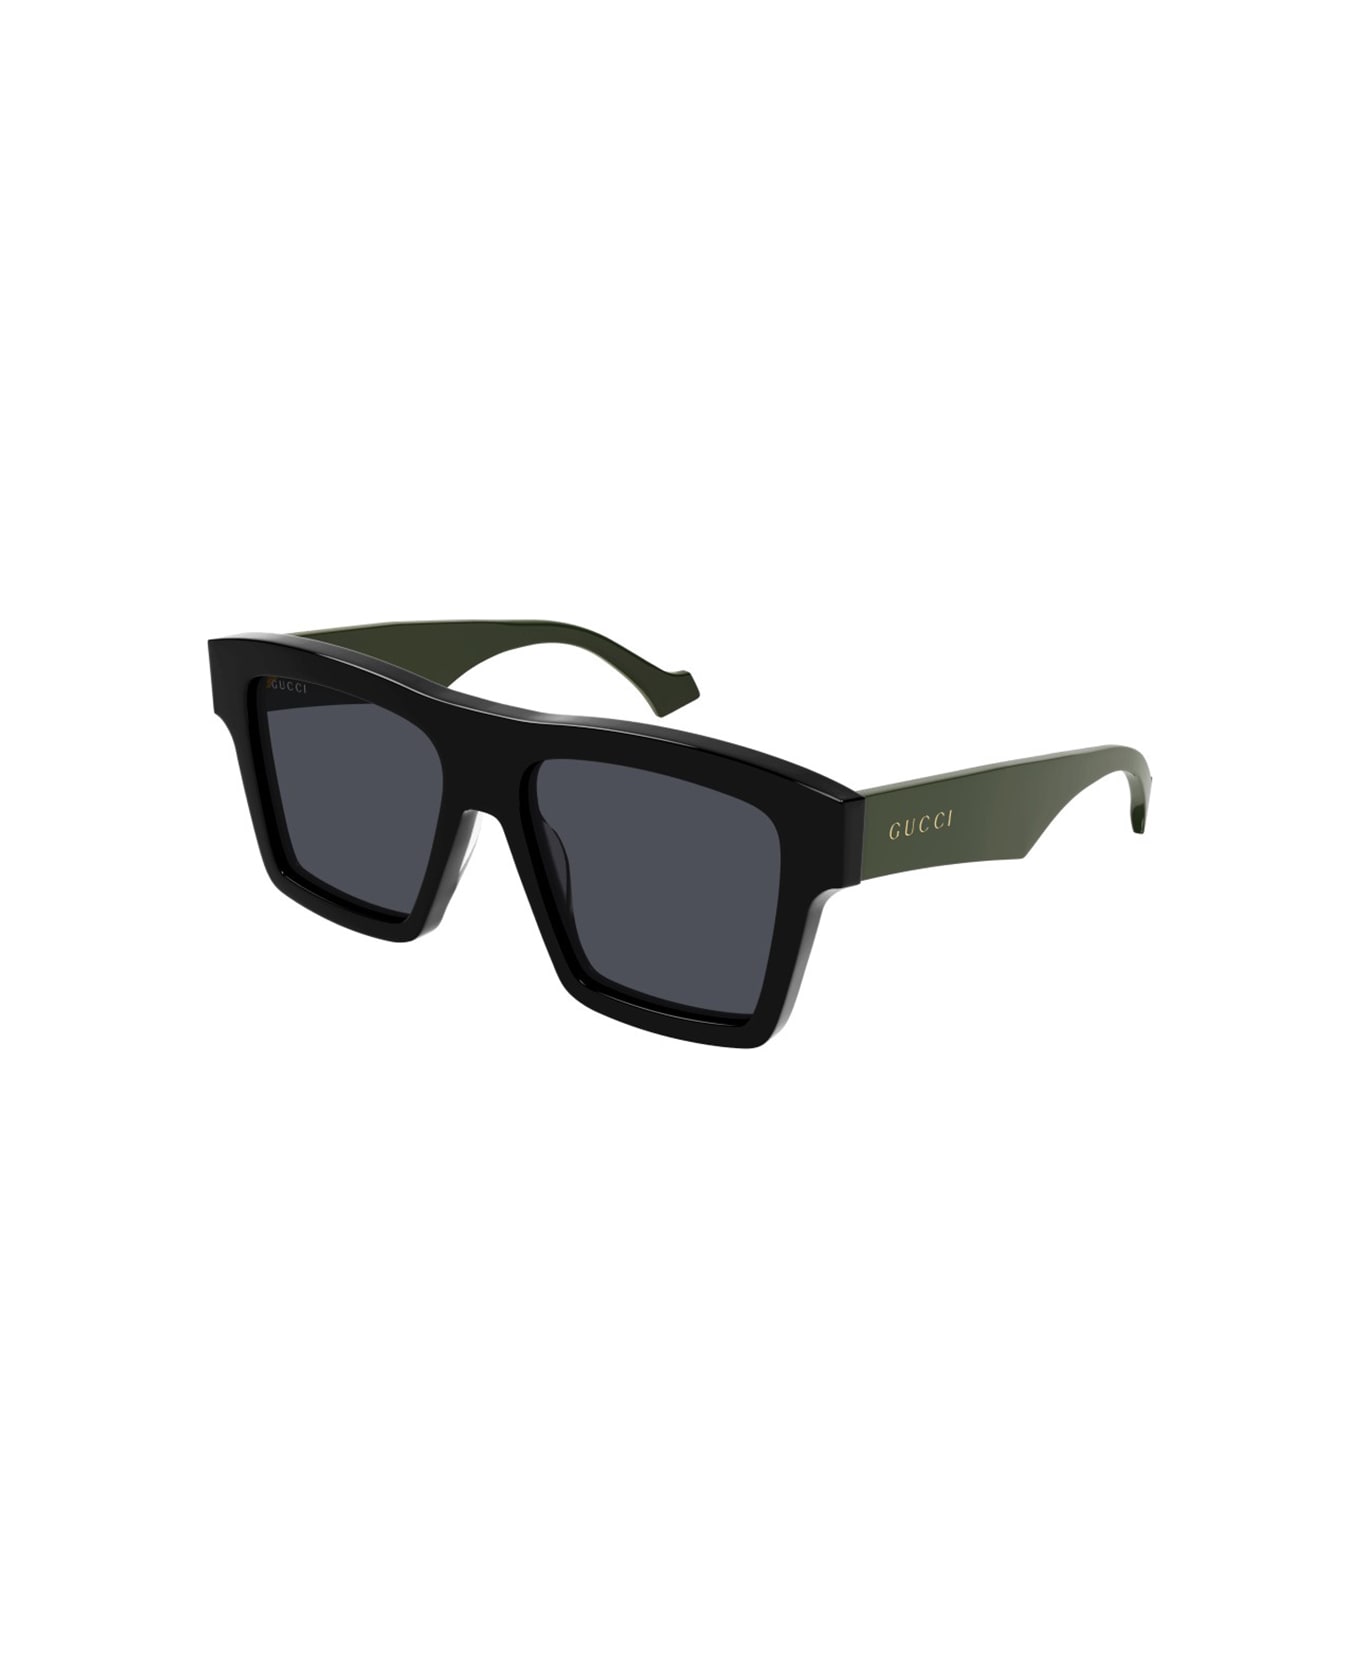 Gucci Eyewear 18lc43l0a - Sunglasses LAUREN RALPH LAUREN 0RL8186 50018G Shiny Black Gradient Grey